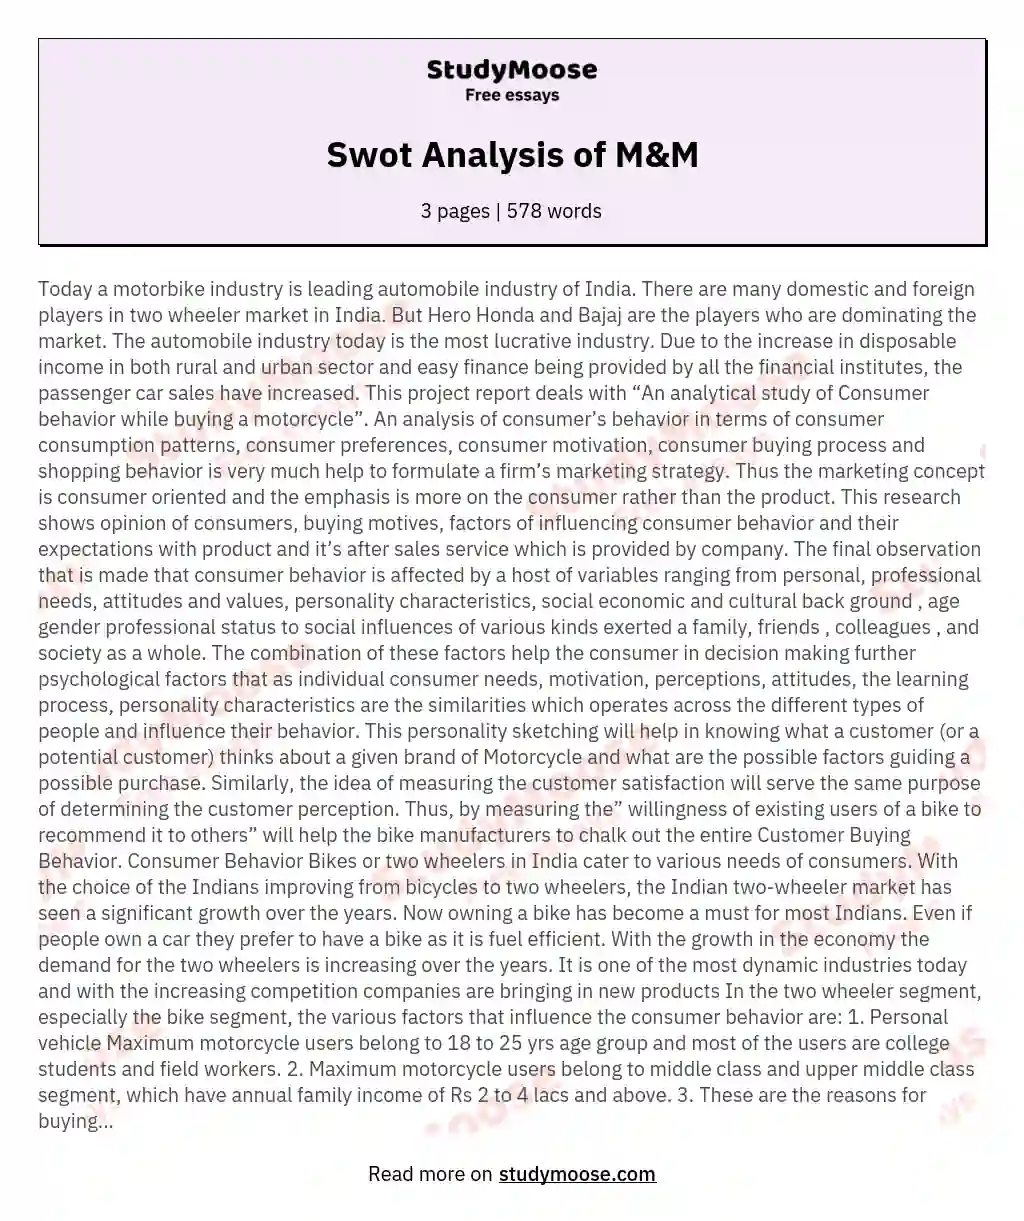 Swot Analysis of M&amp;M essay